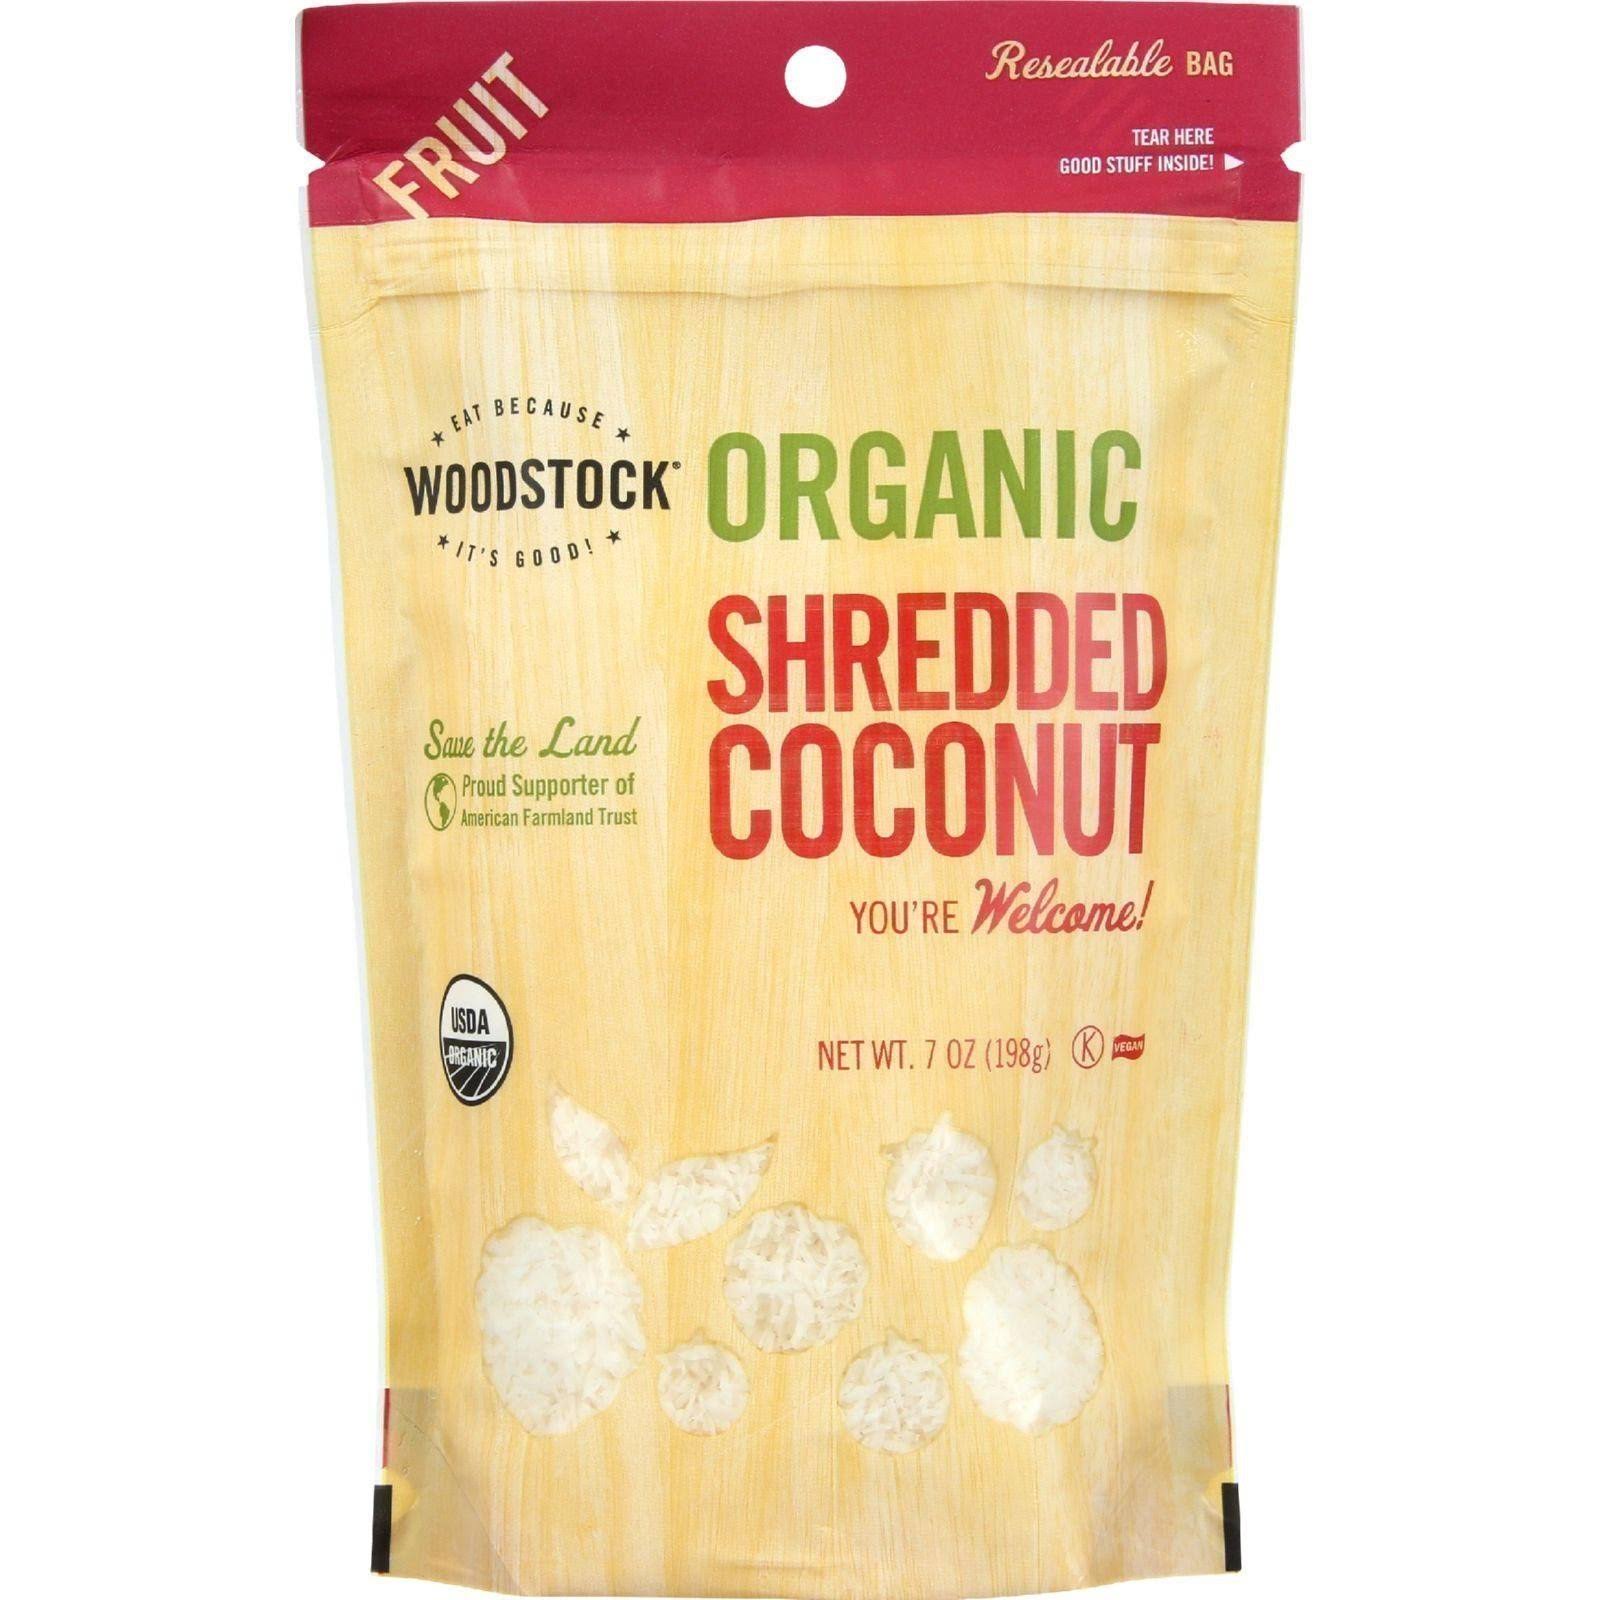 Woodstock Organic Shredded Coconut